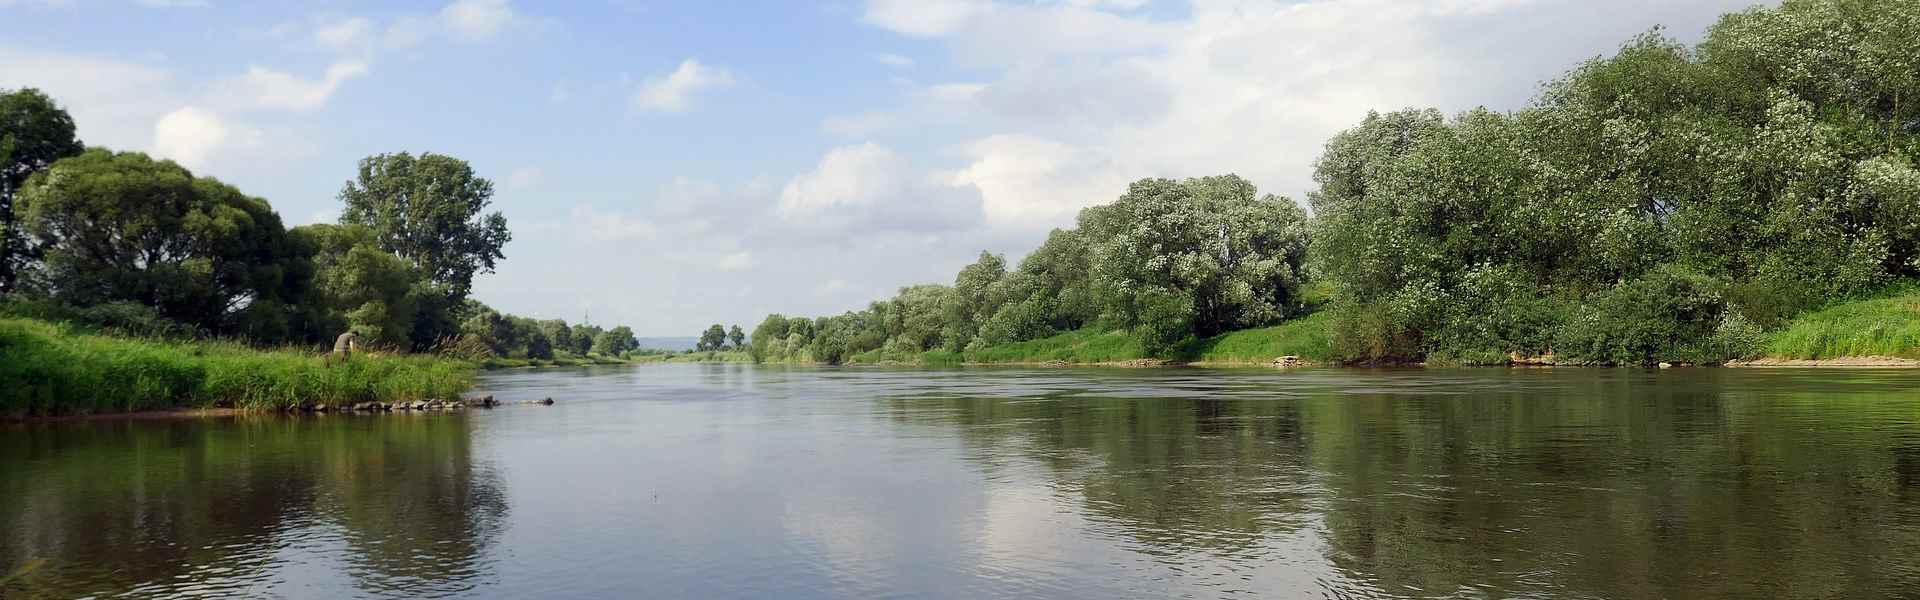 Ferienwohnung Oldenburg - Wandern an den Flüssen entlang